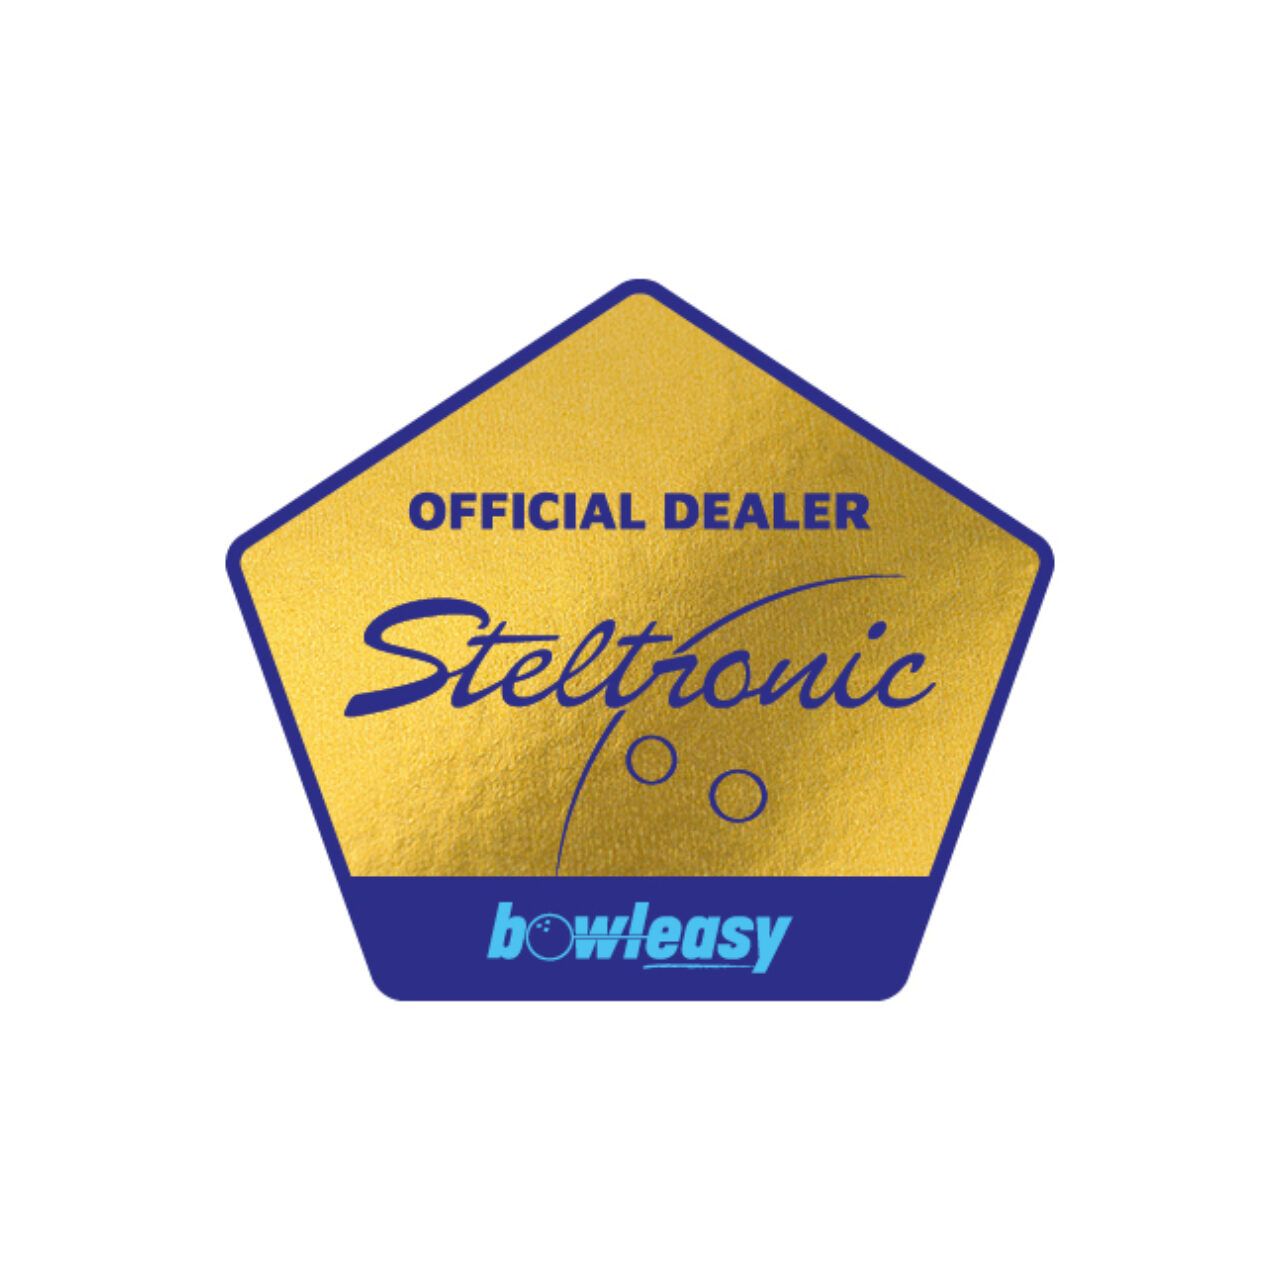 Steltronic Seal